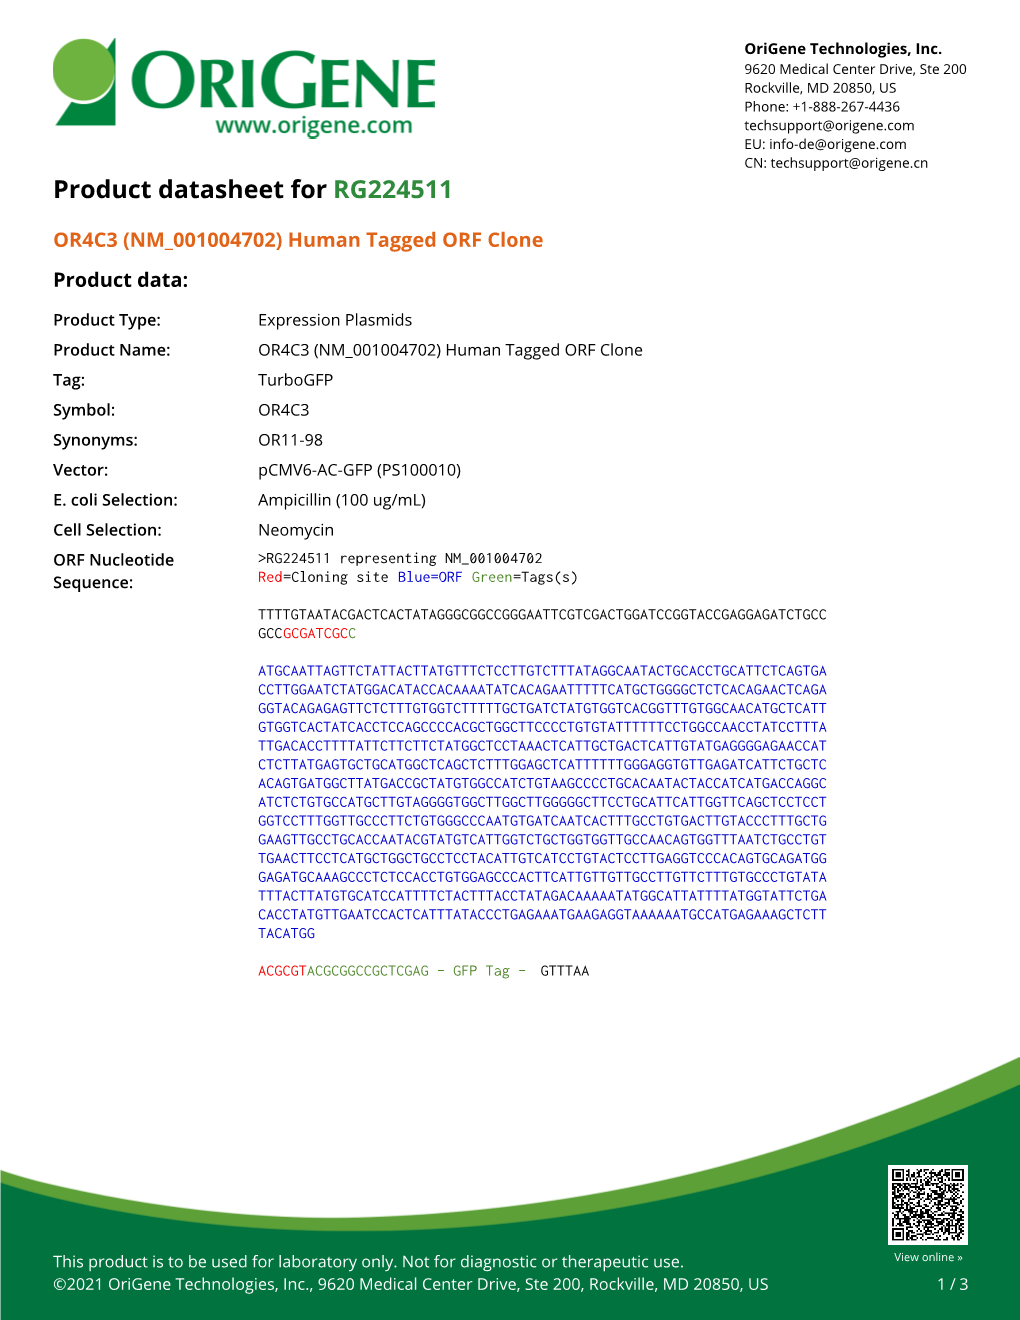 OR4C3 (NM 001004702) Human Tagged ORF Clone – RG224511